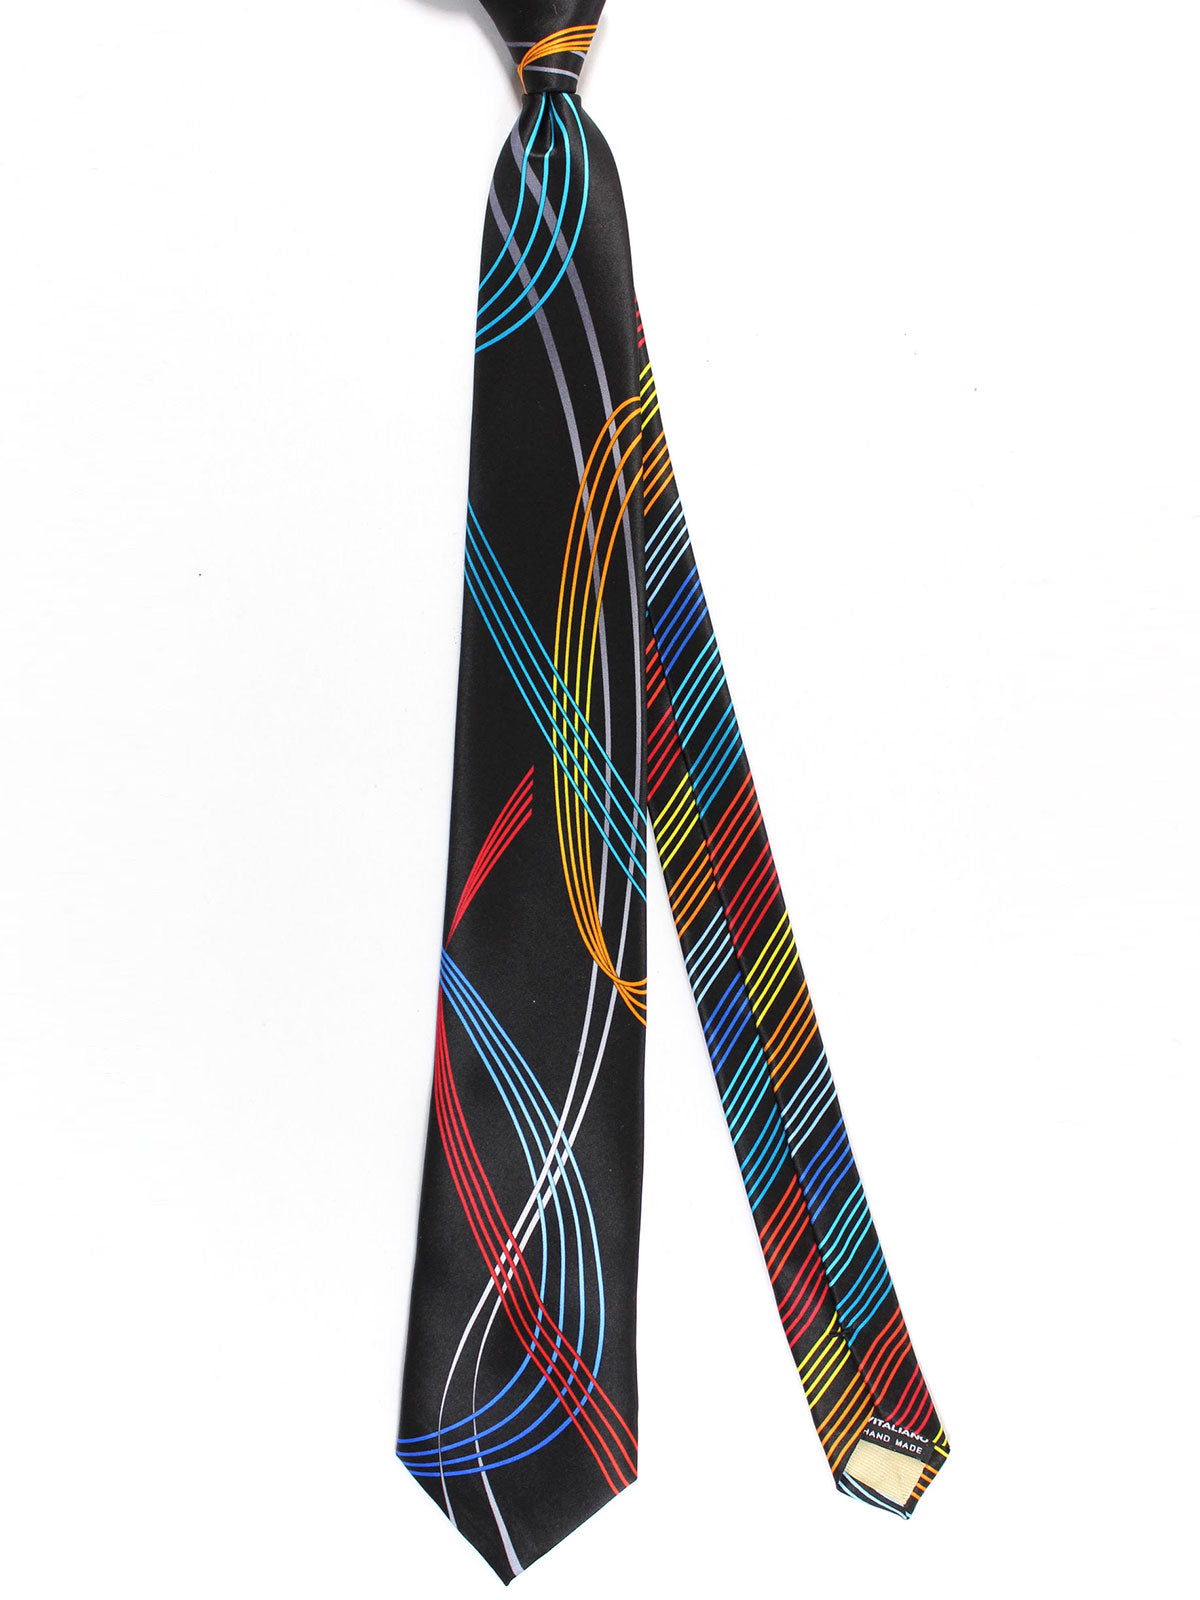 Vitaliano Pancaldi Tie Black Blue Red Swirl Design